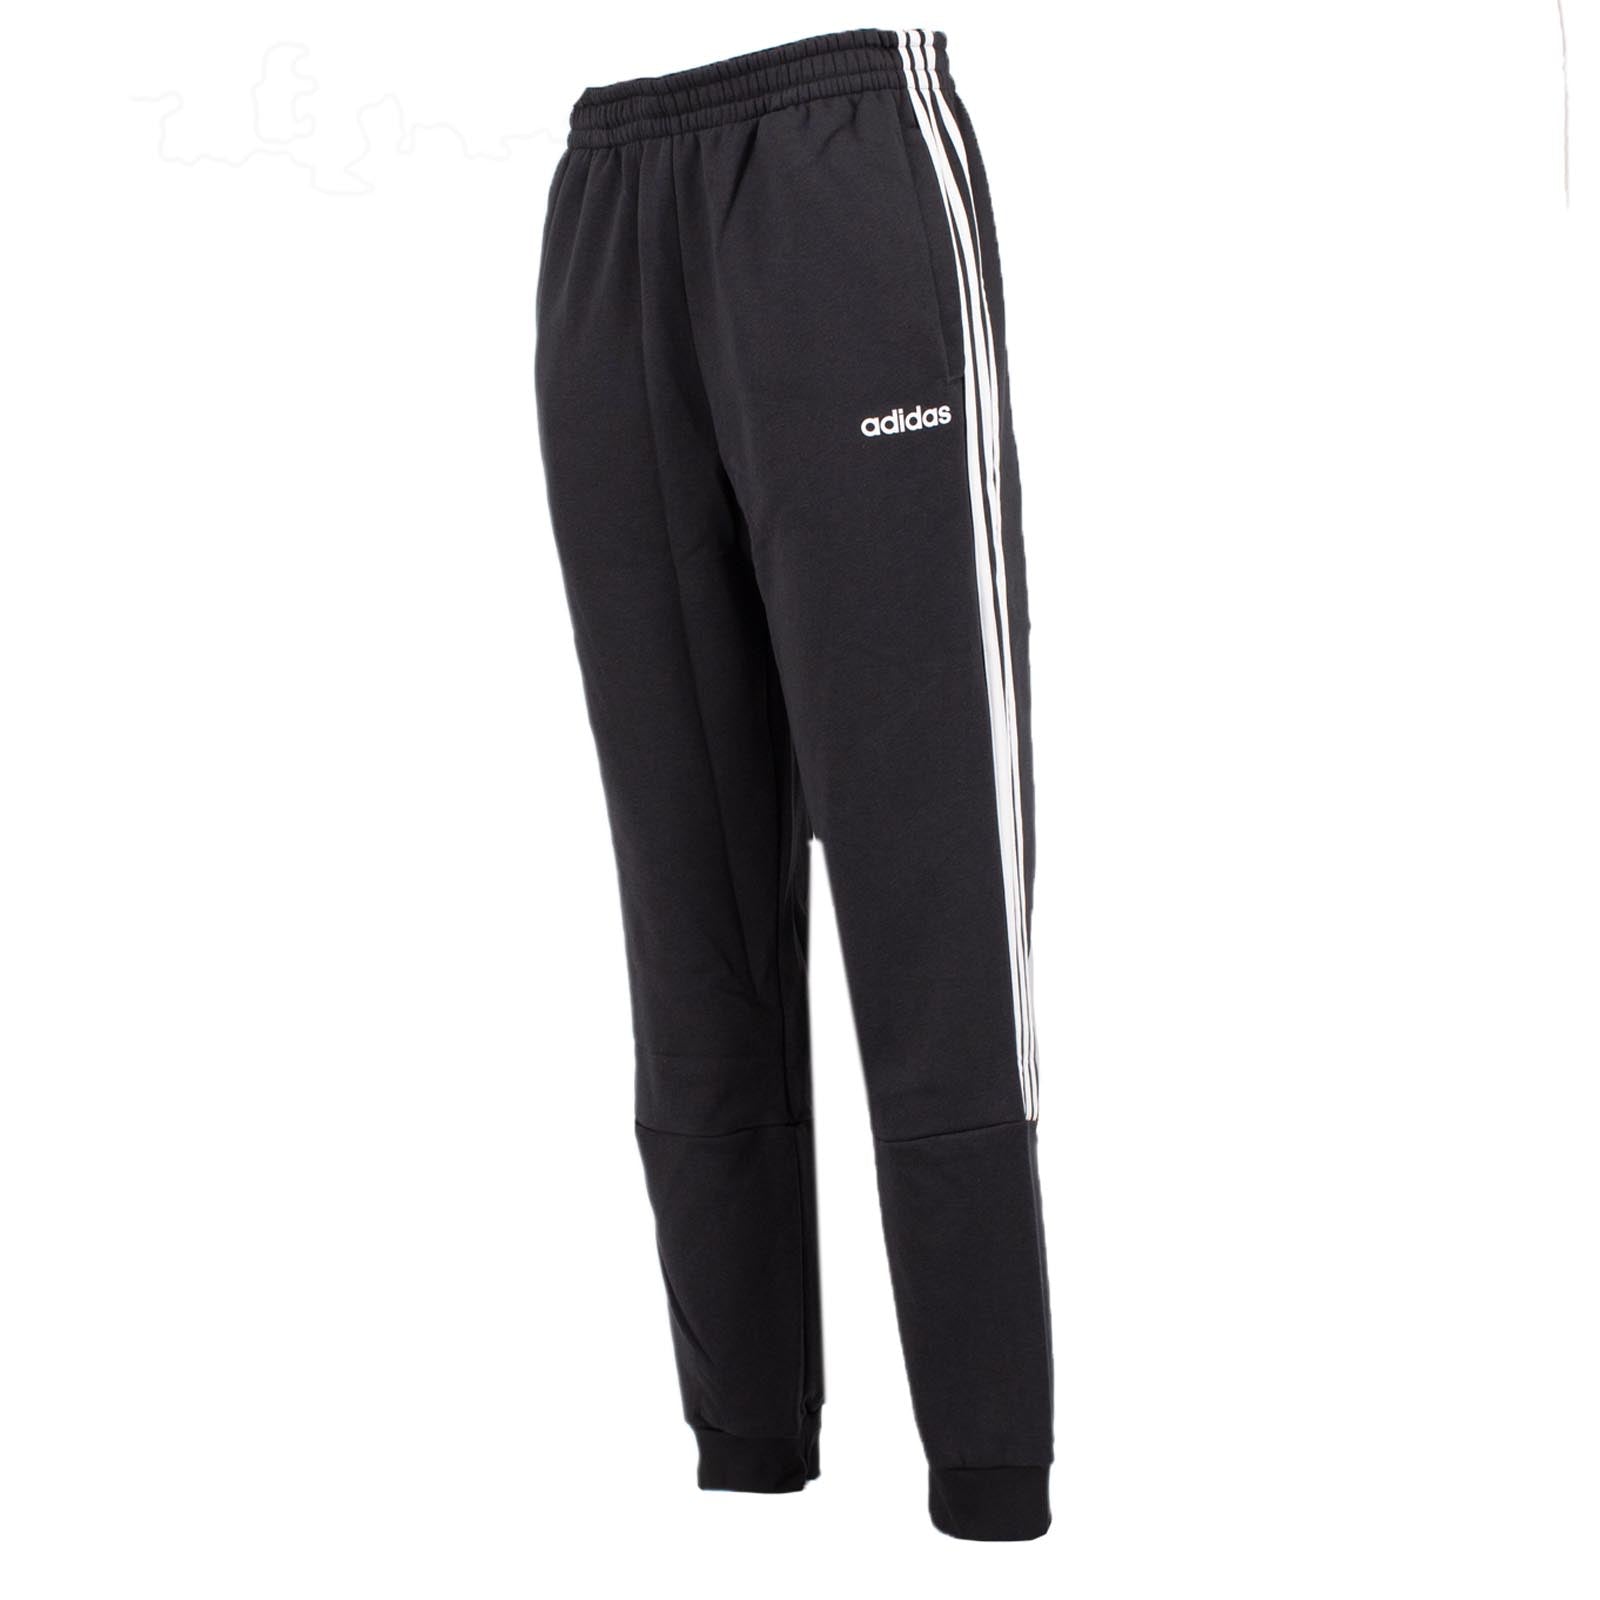 Adidas 3 Stripes Fitness Track Pants Herren Training Hose Jogging Grau FL4846 S